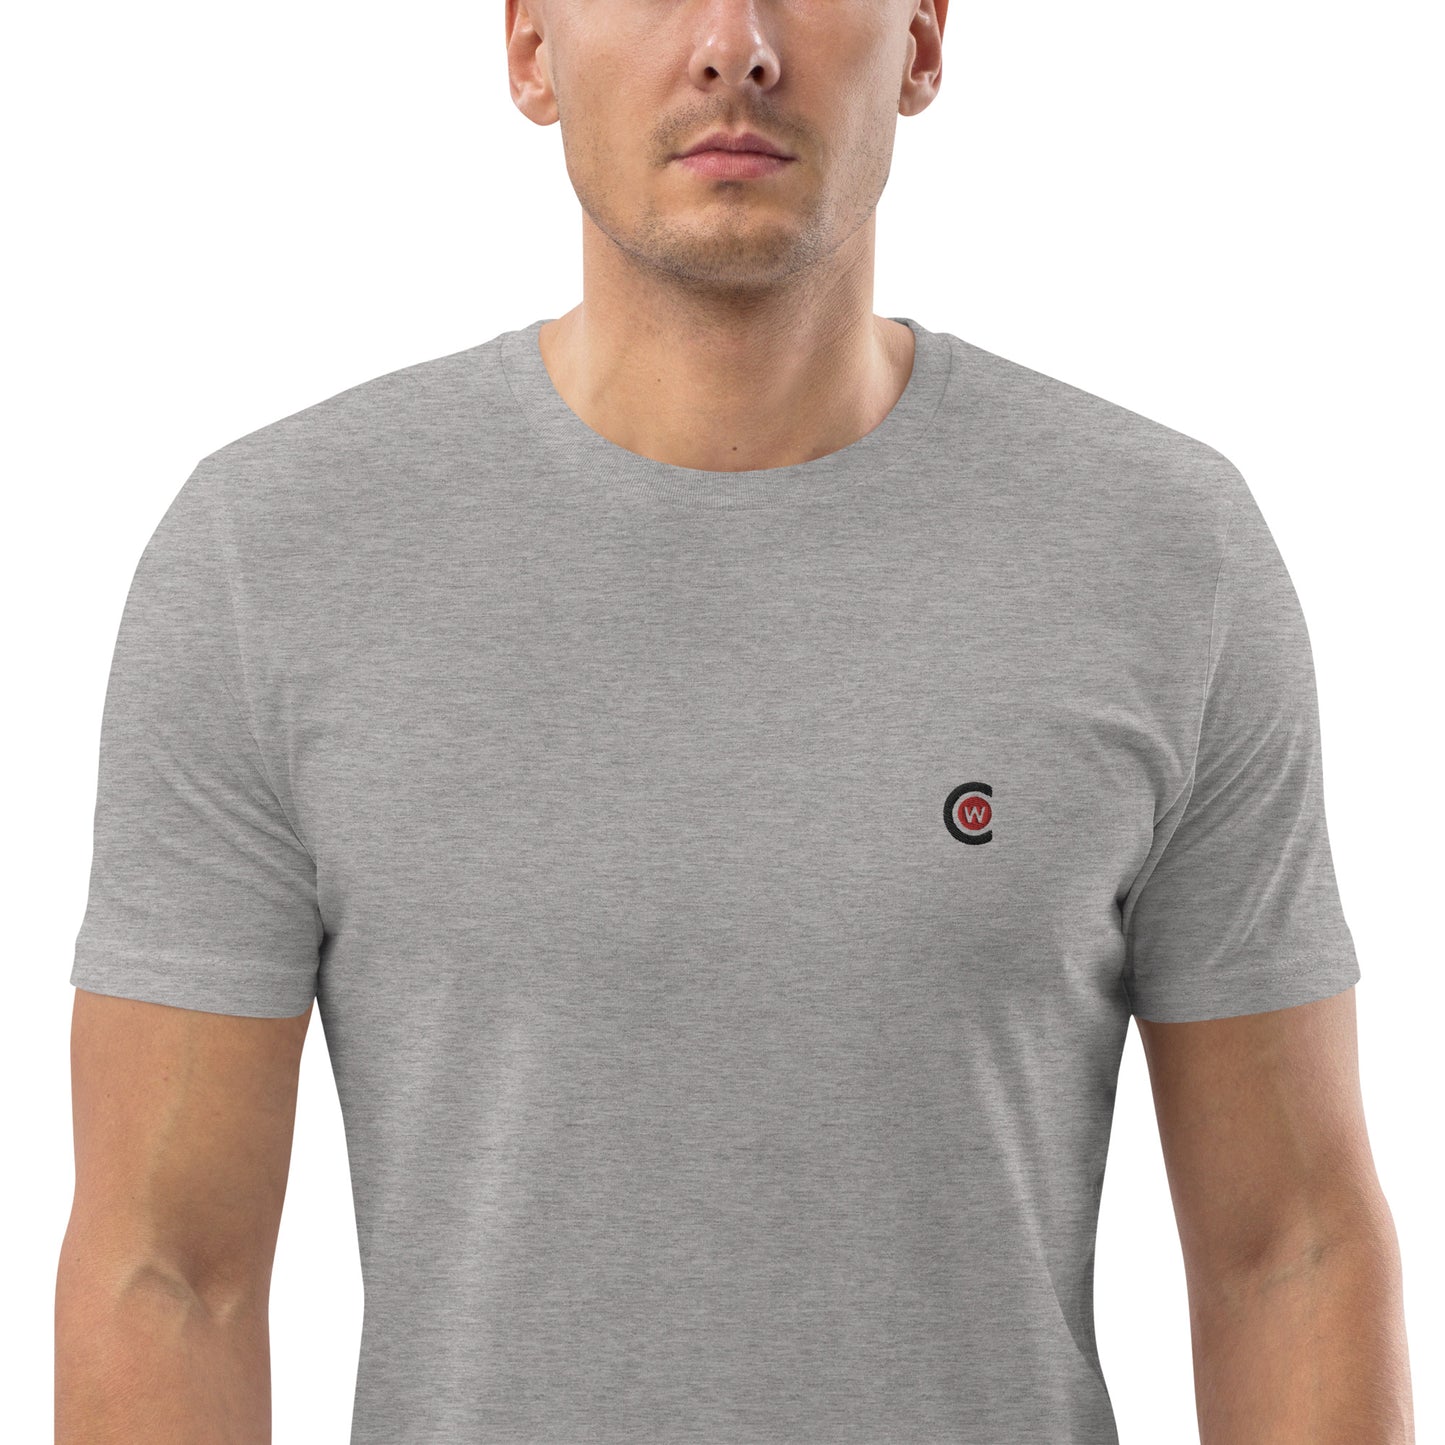 Men's Organic cotton t-shirt